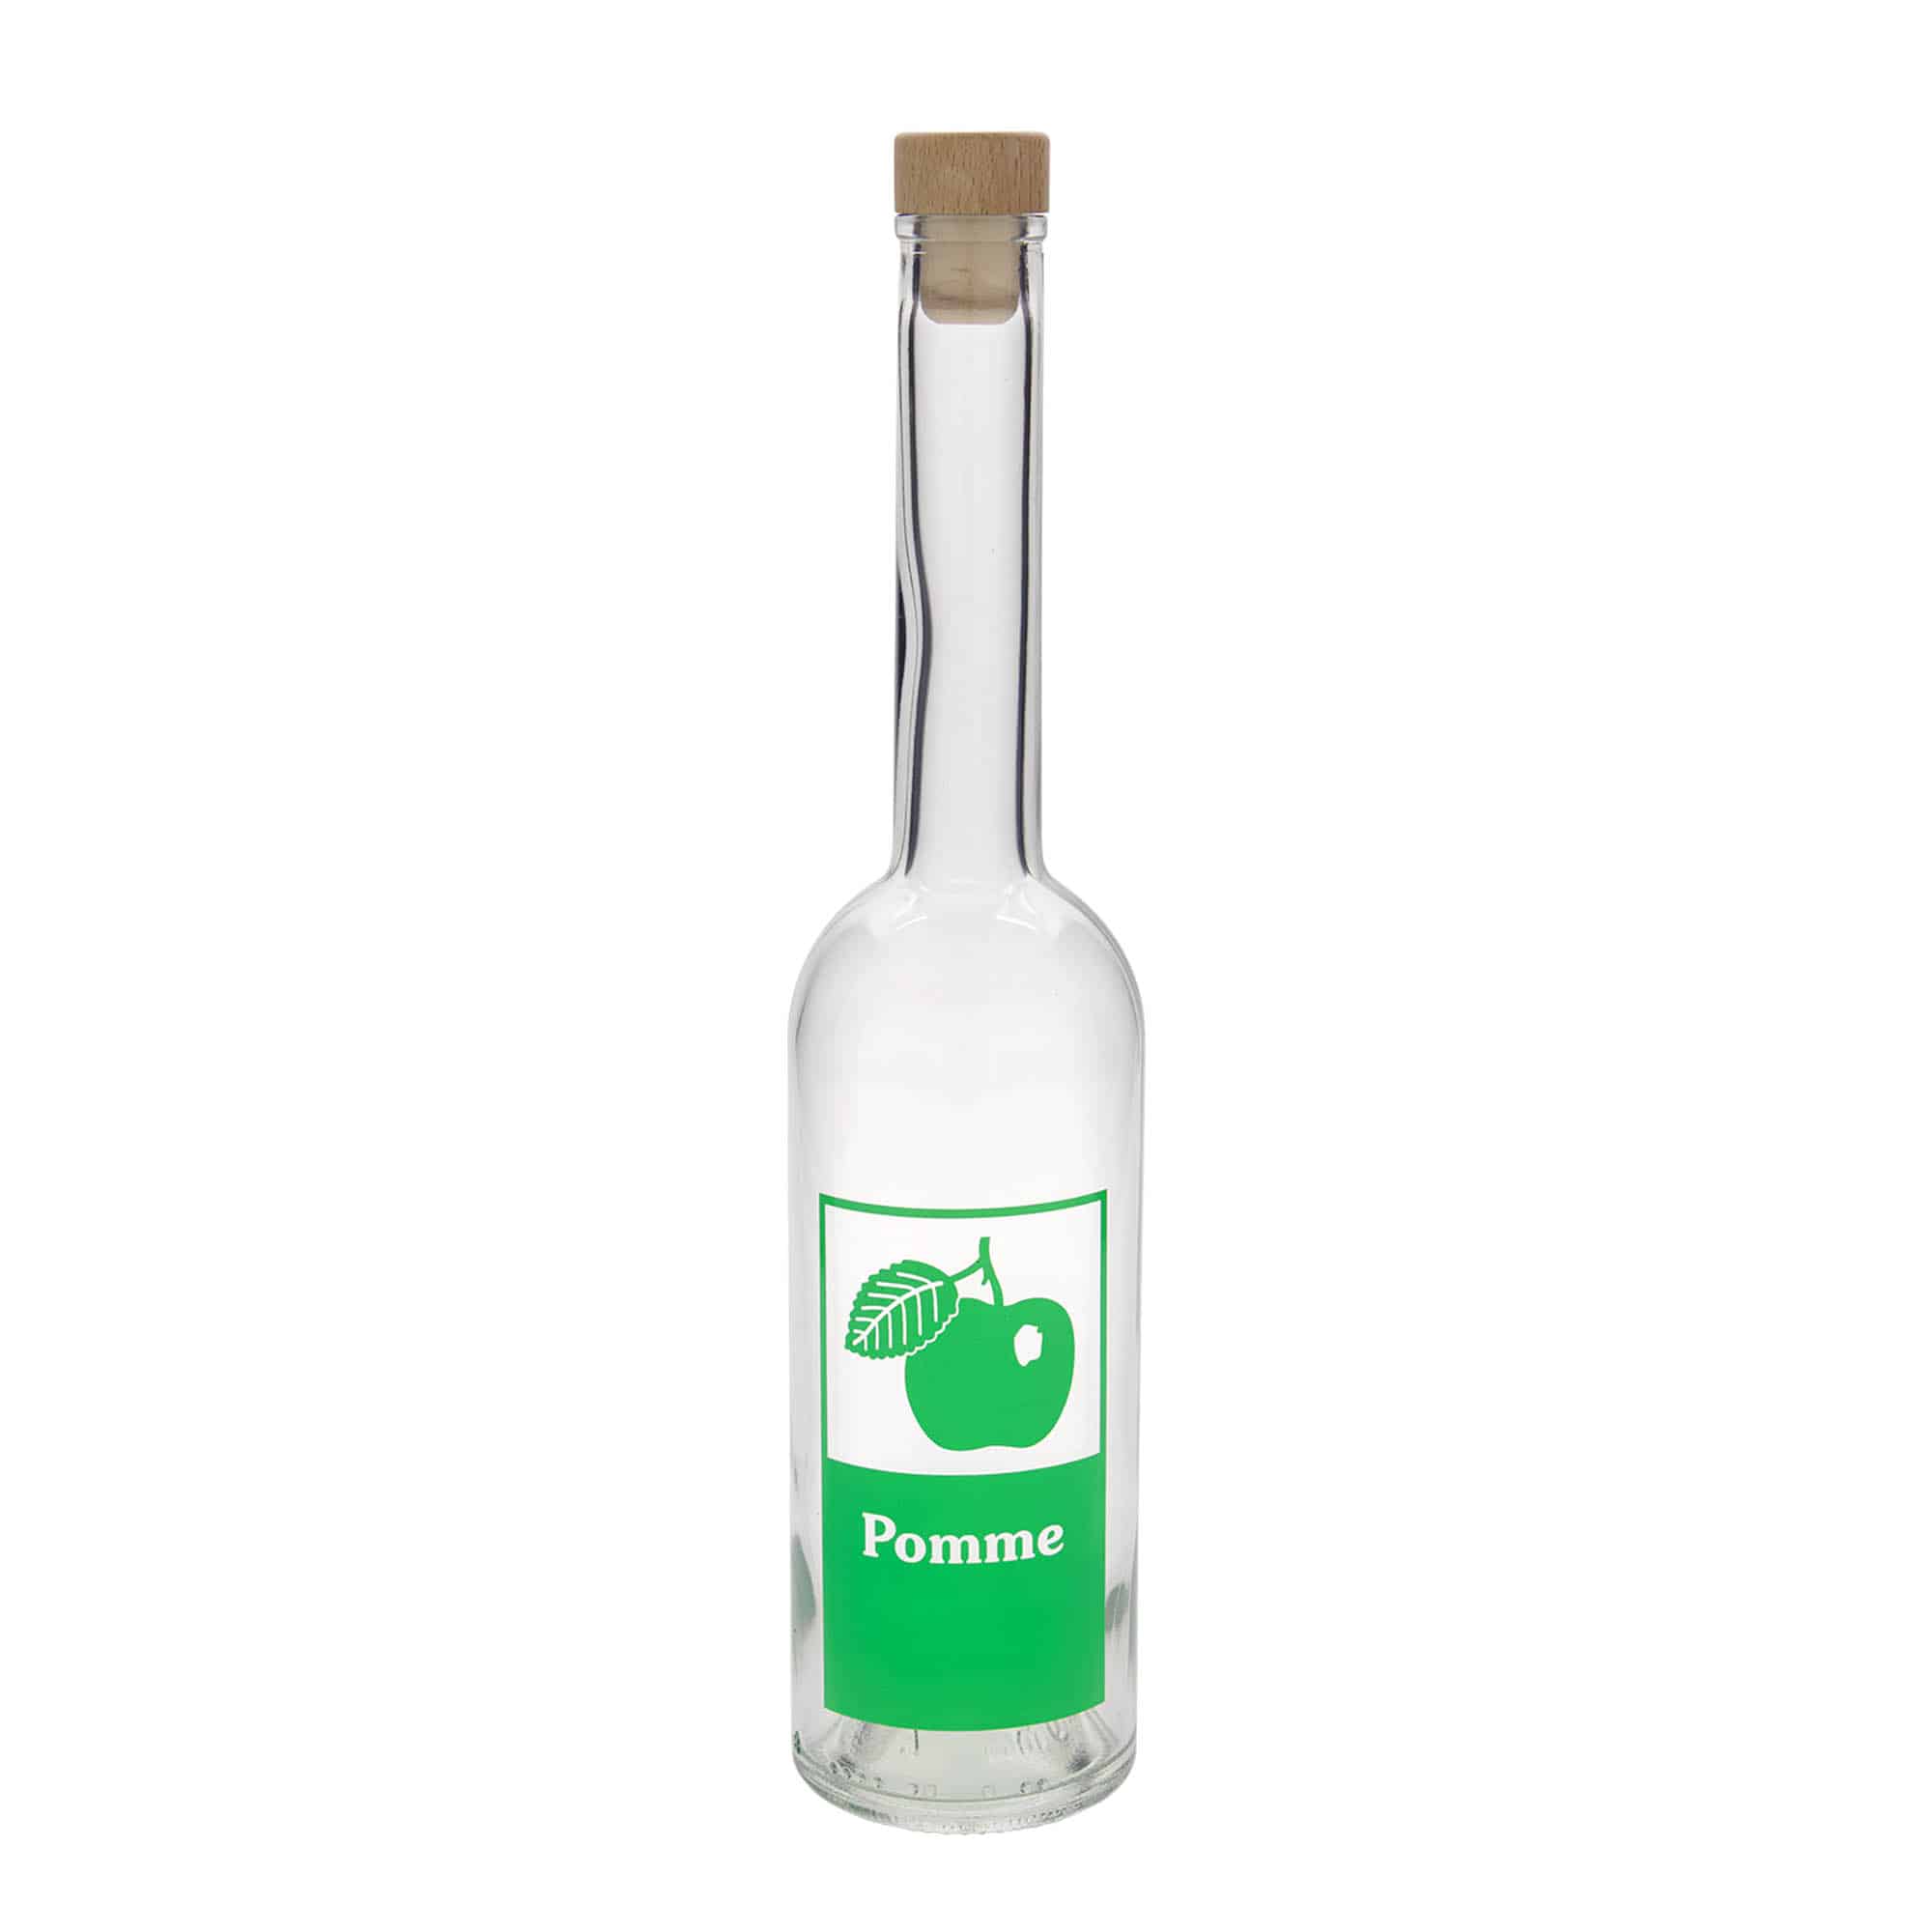 500 ml glass bottle 'Opera', print: Pomme, closure: cork